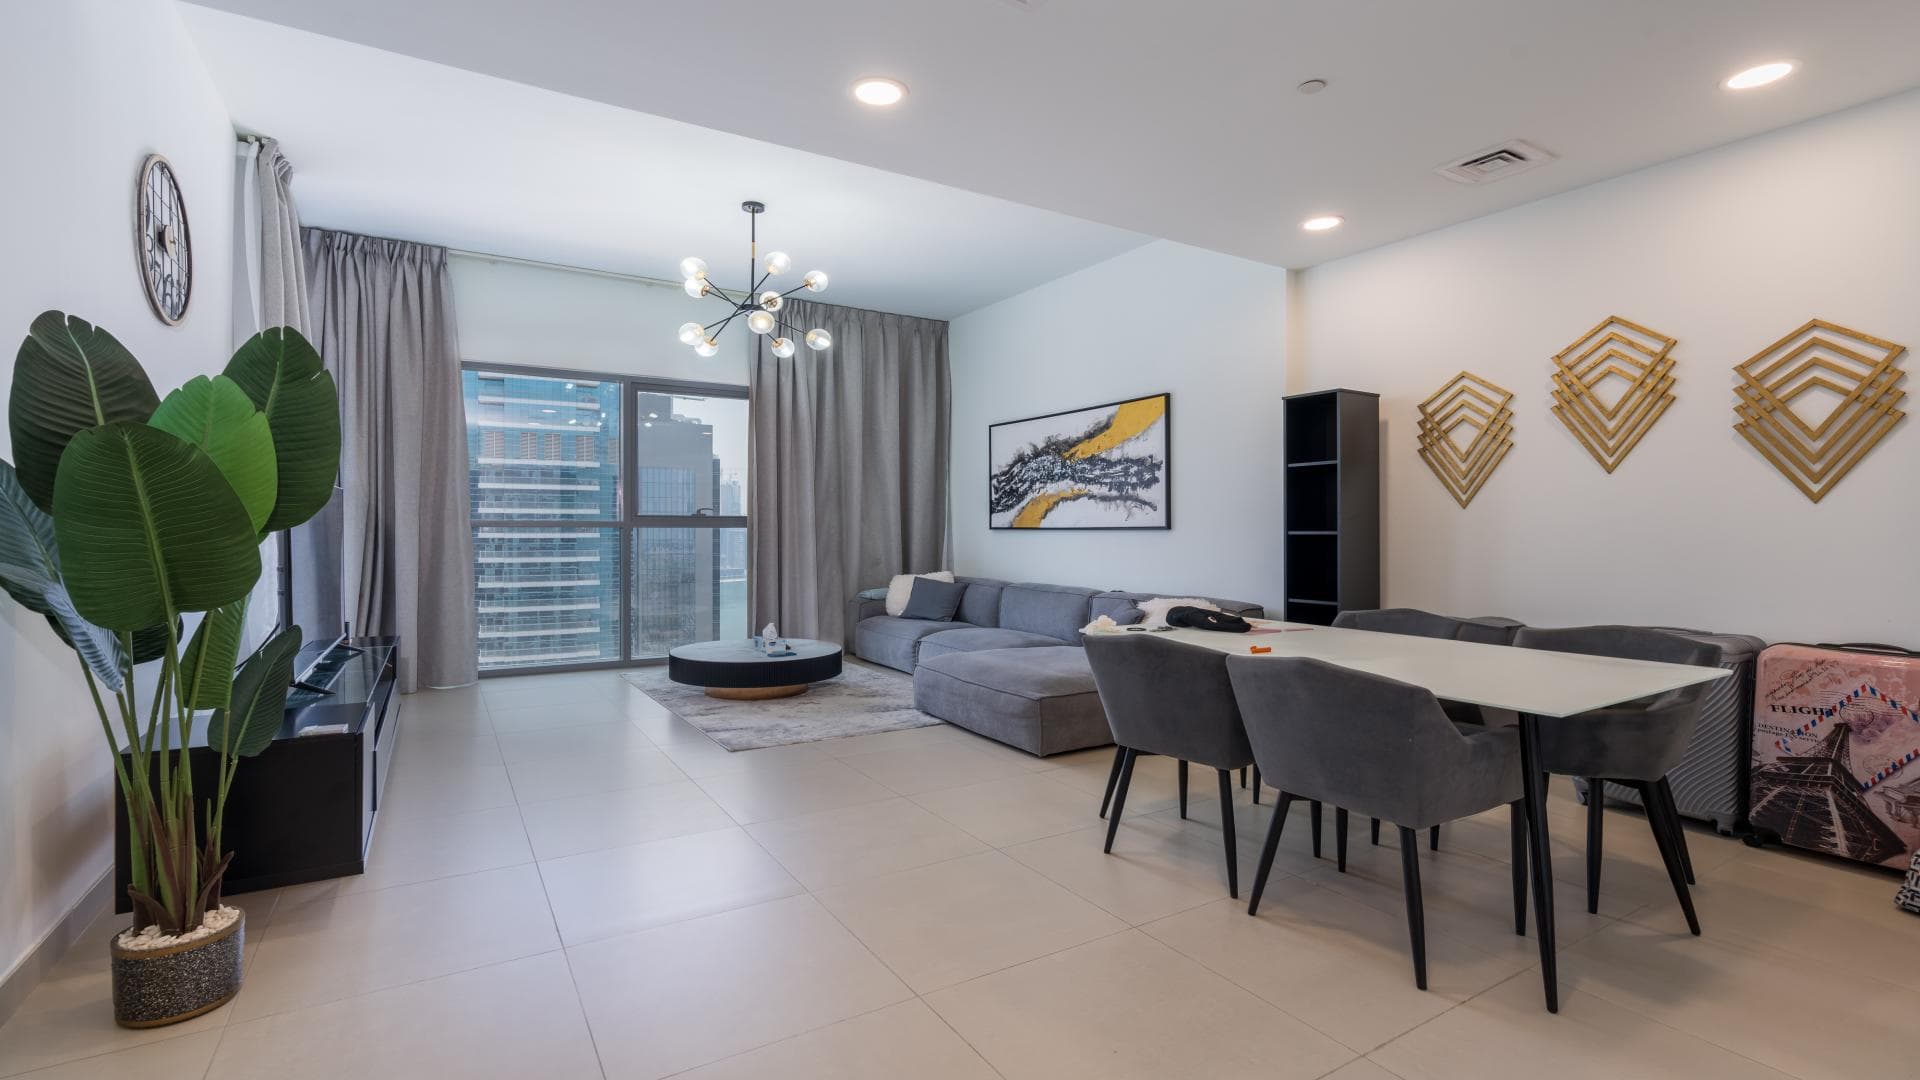 1 Bedroom Apartment For Rent Forte 1 Lp36260 2dd43434d95d6000.jpg